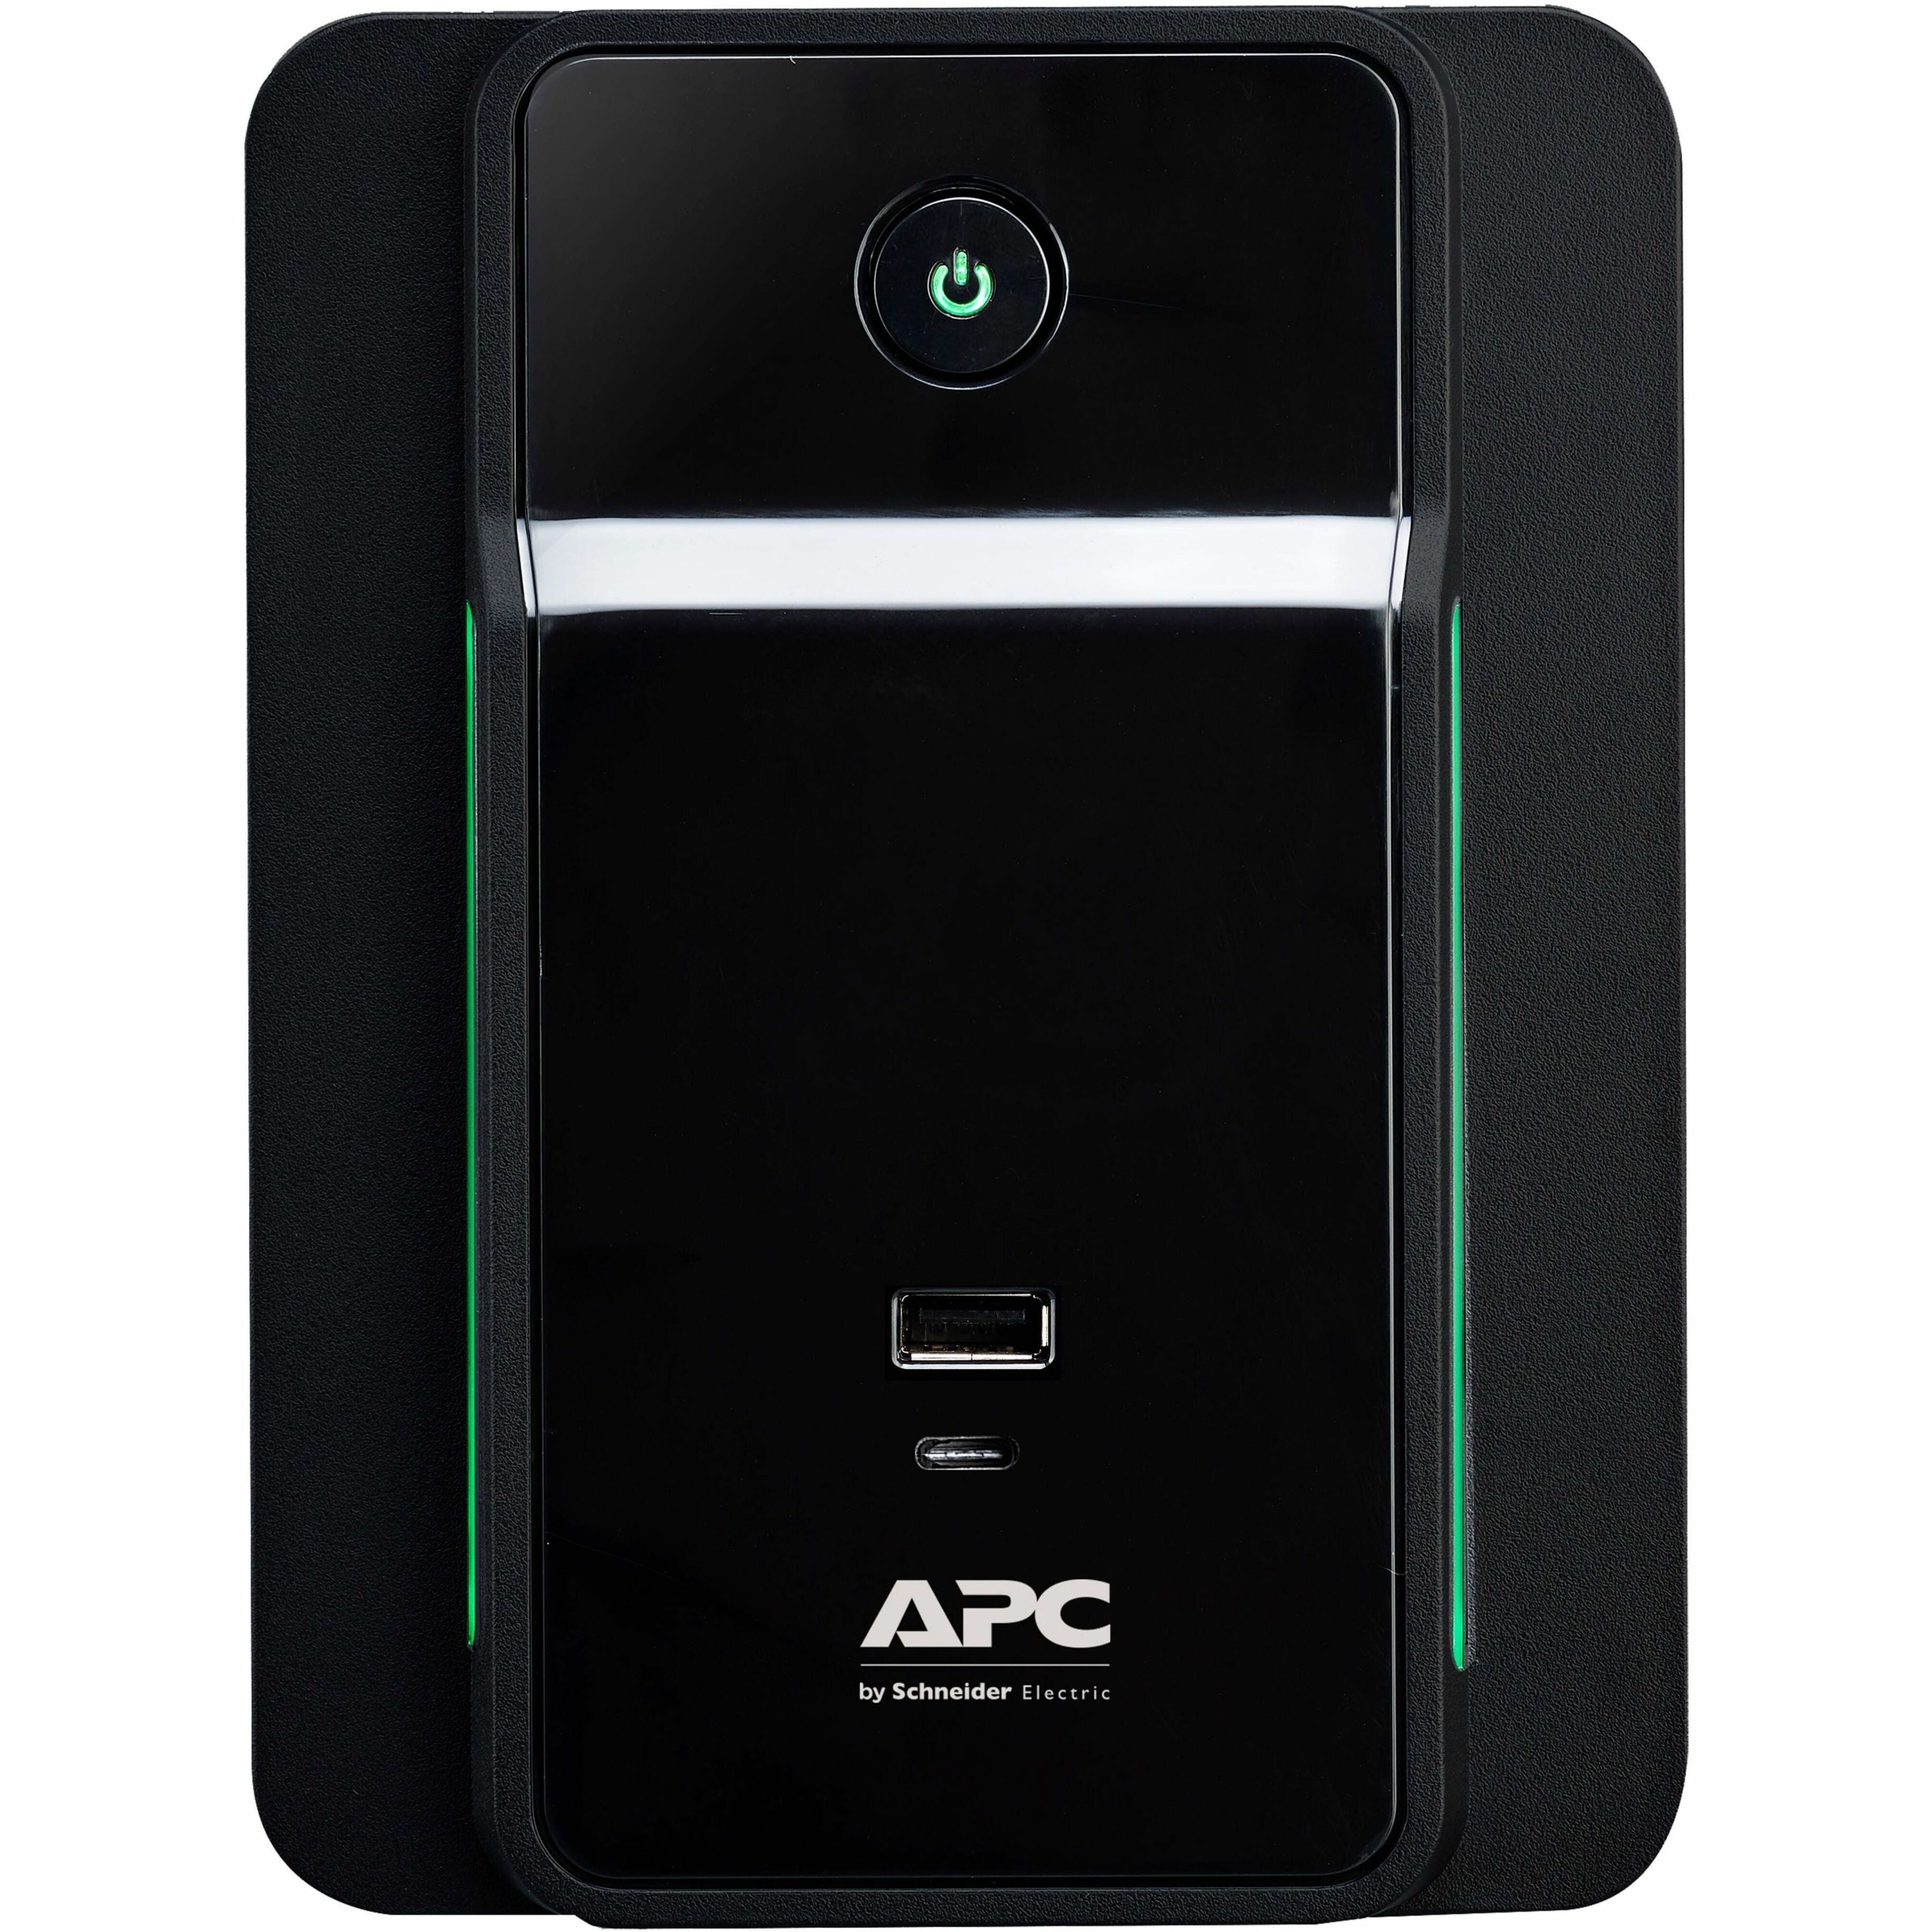 APC BVK950M2 Back-UPS 950VA Tower UPS, 3-Year Warranty, Low Battery Alarm, Environmentally Friendly, USB and Network Ports